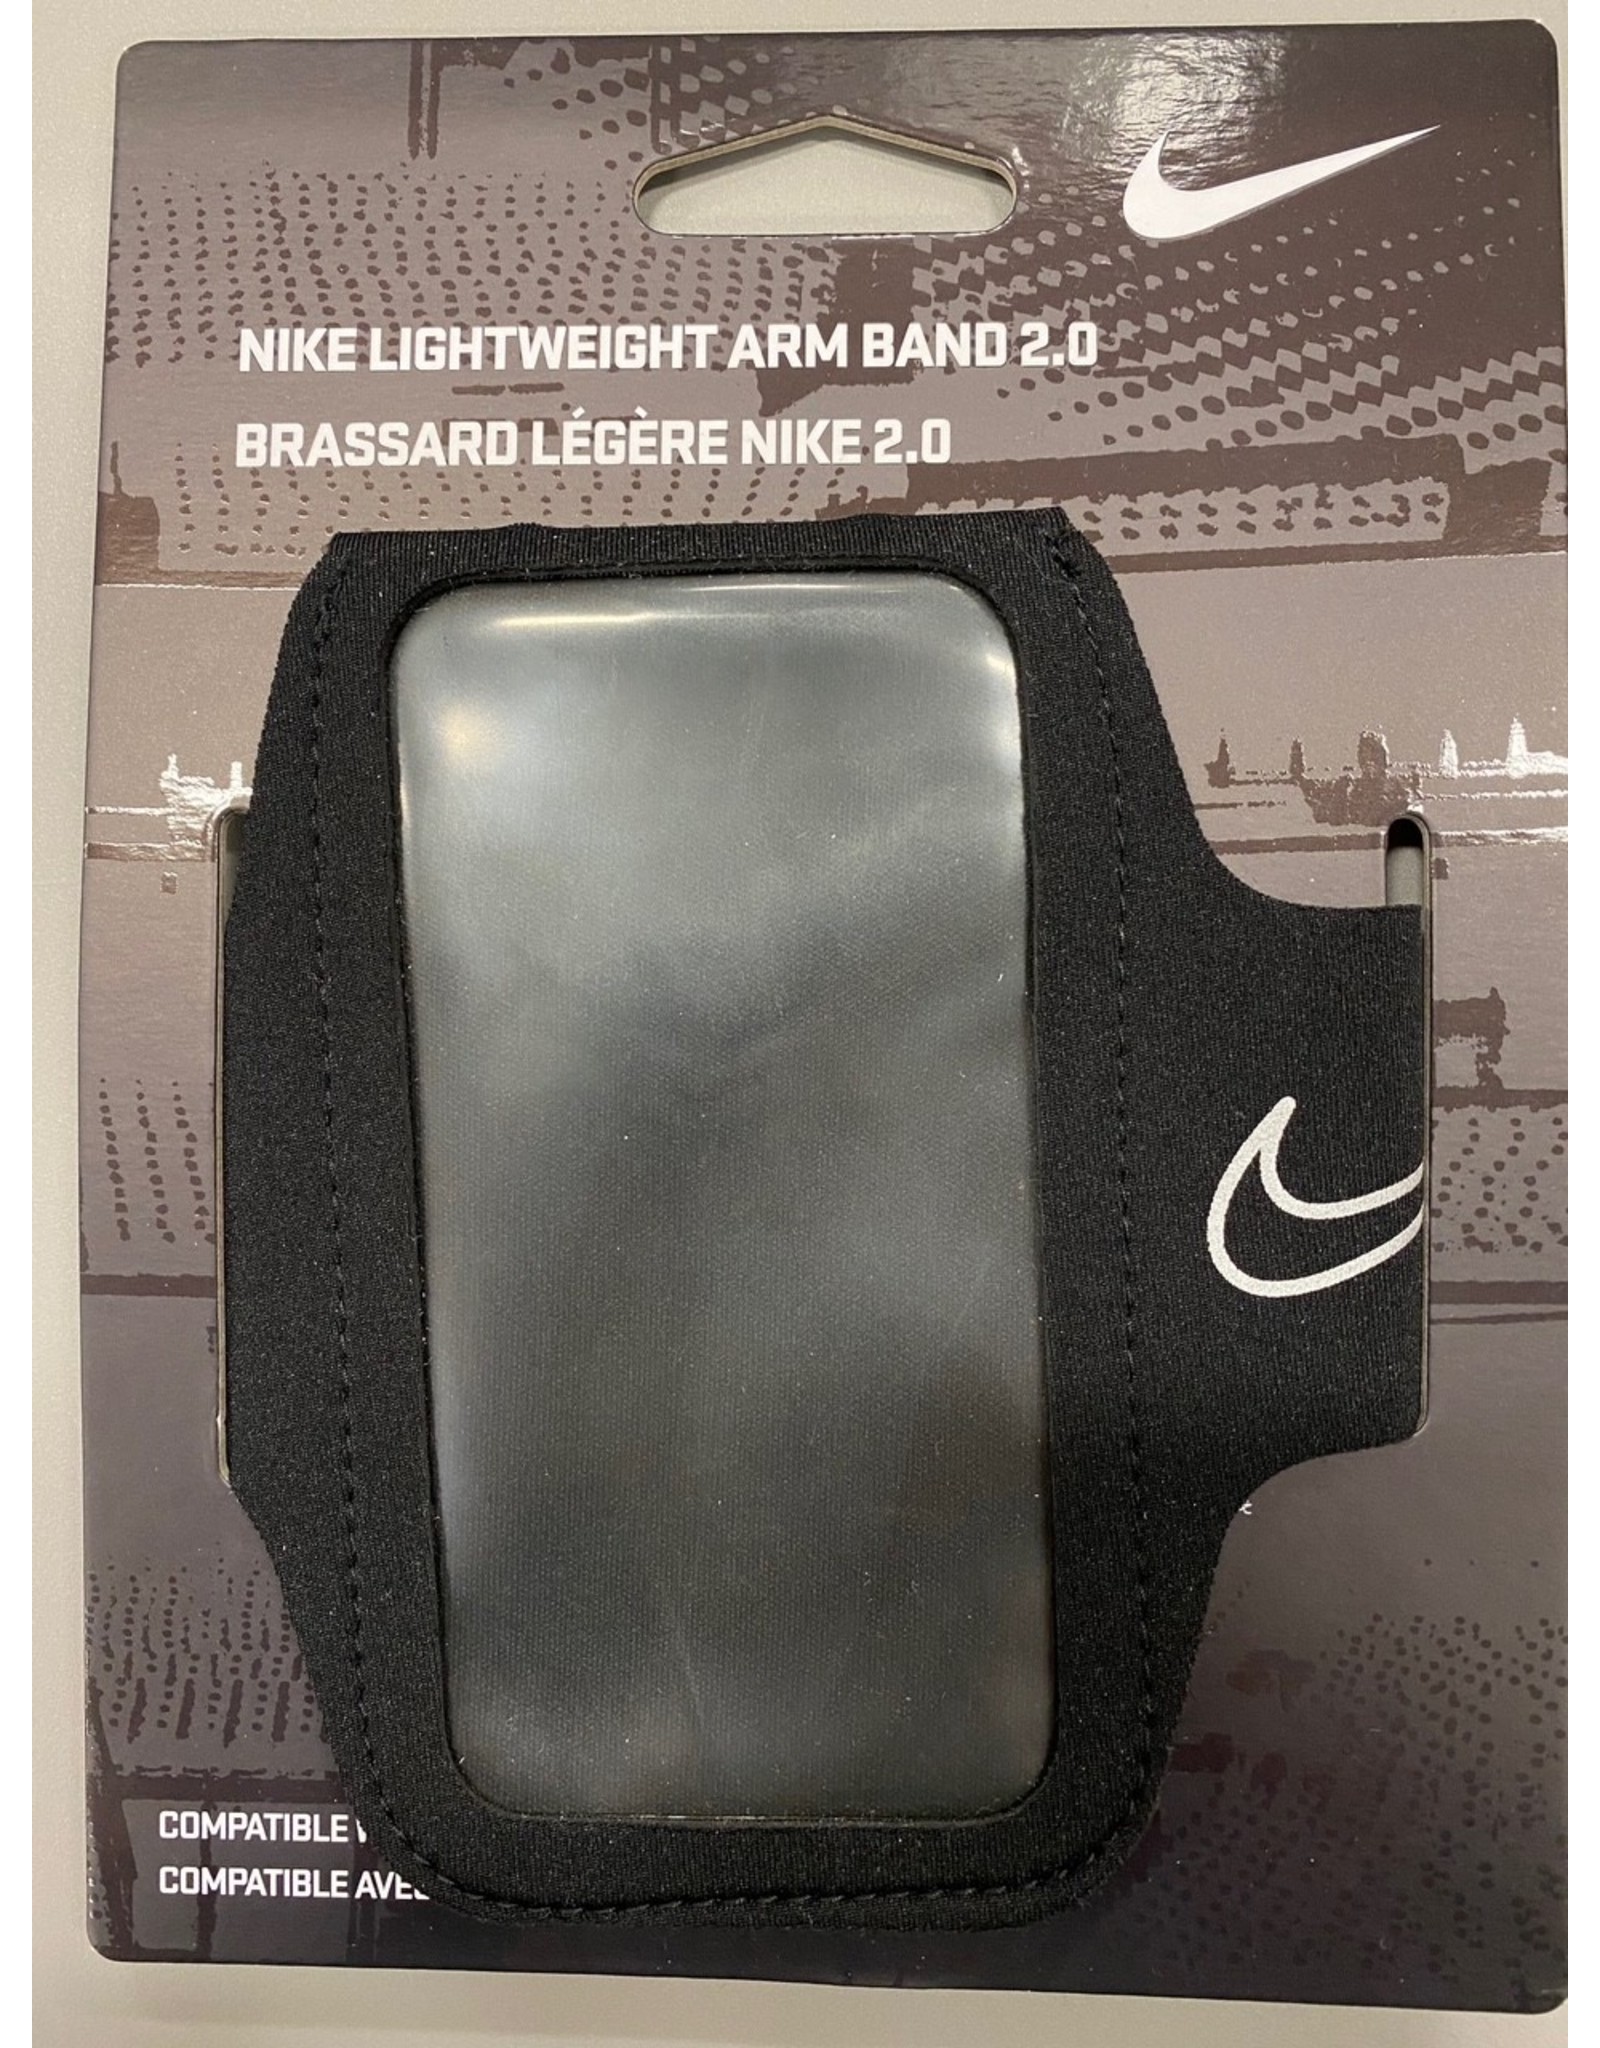 NIKE Lightweight Arm Band 2.0